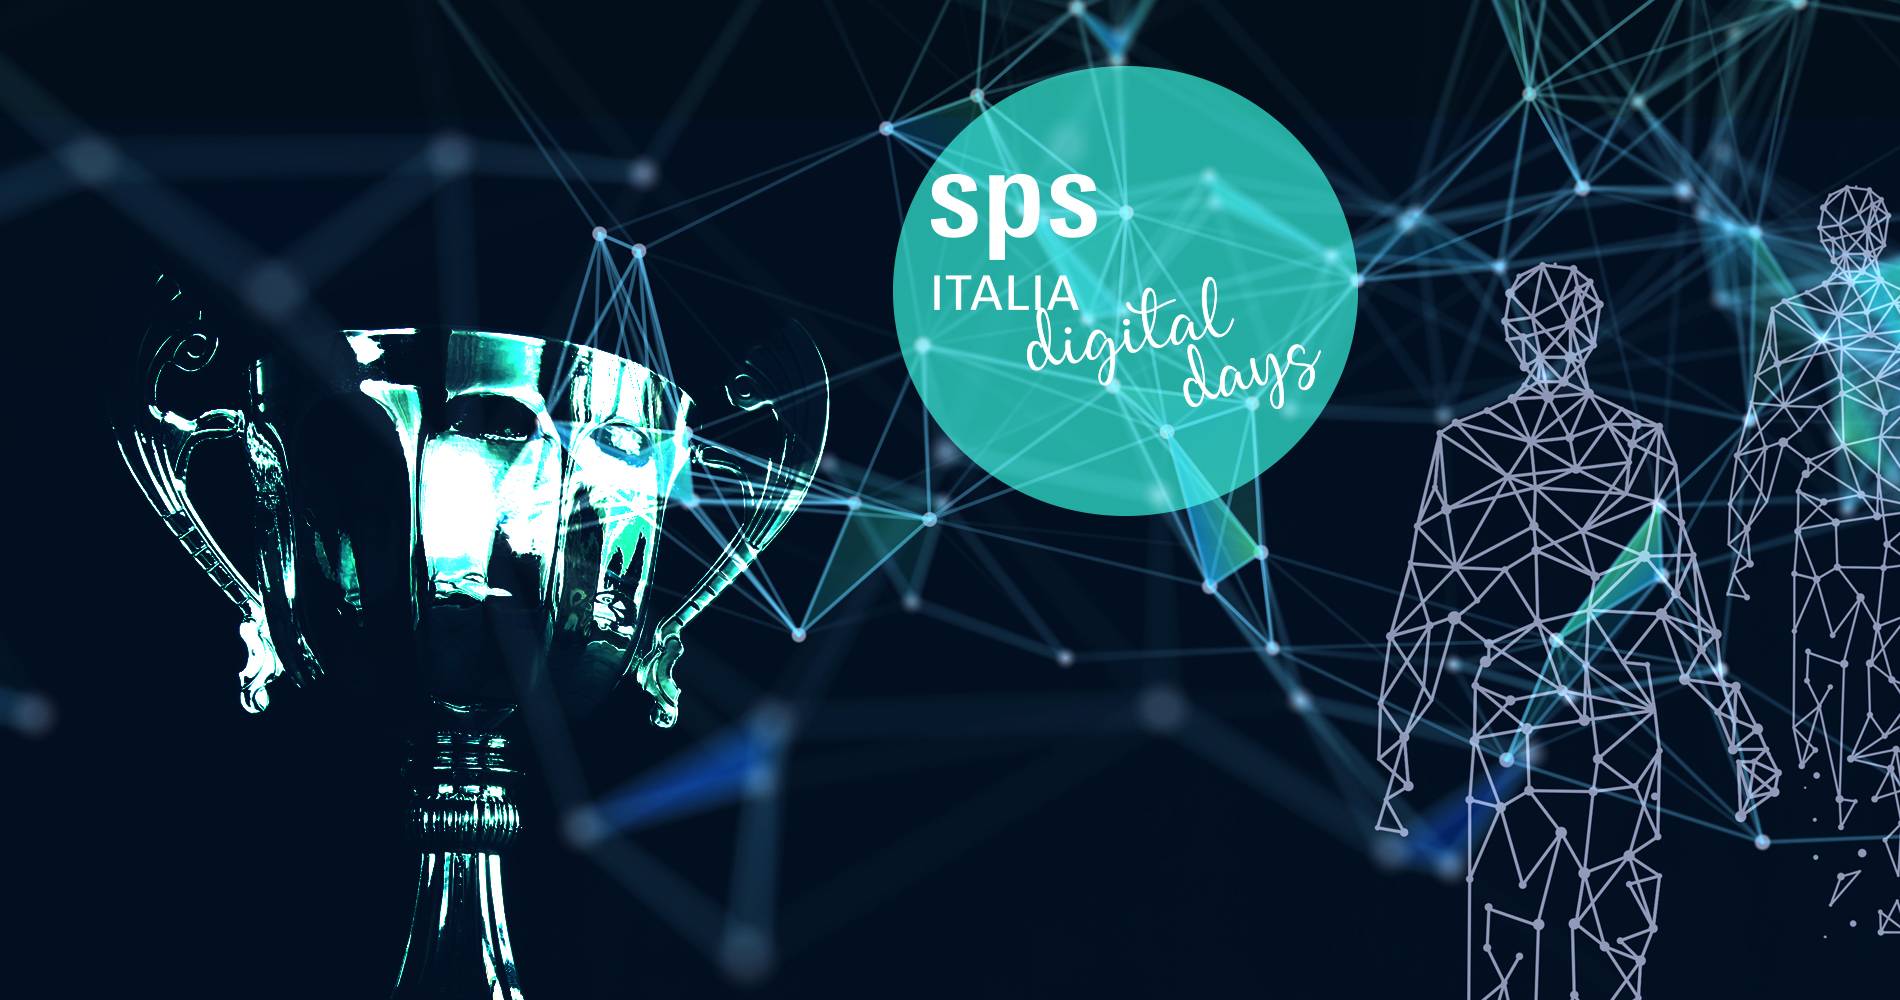 Premiate le migliore memorie presentate ai Convegni Scientifici di SPS Italia Digital Days